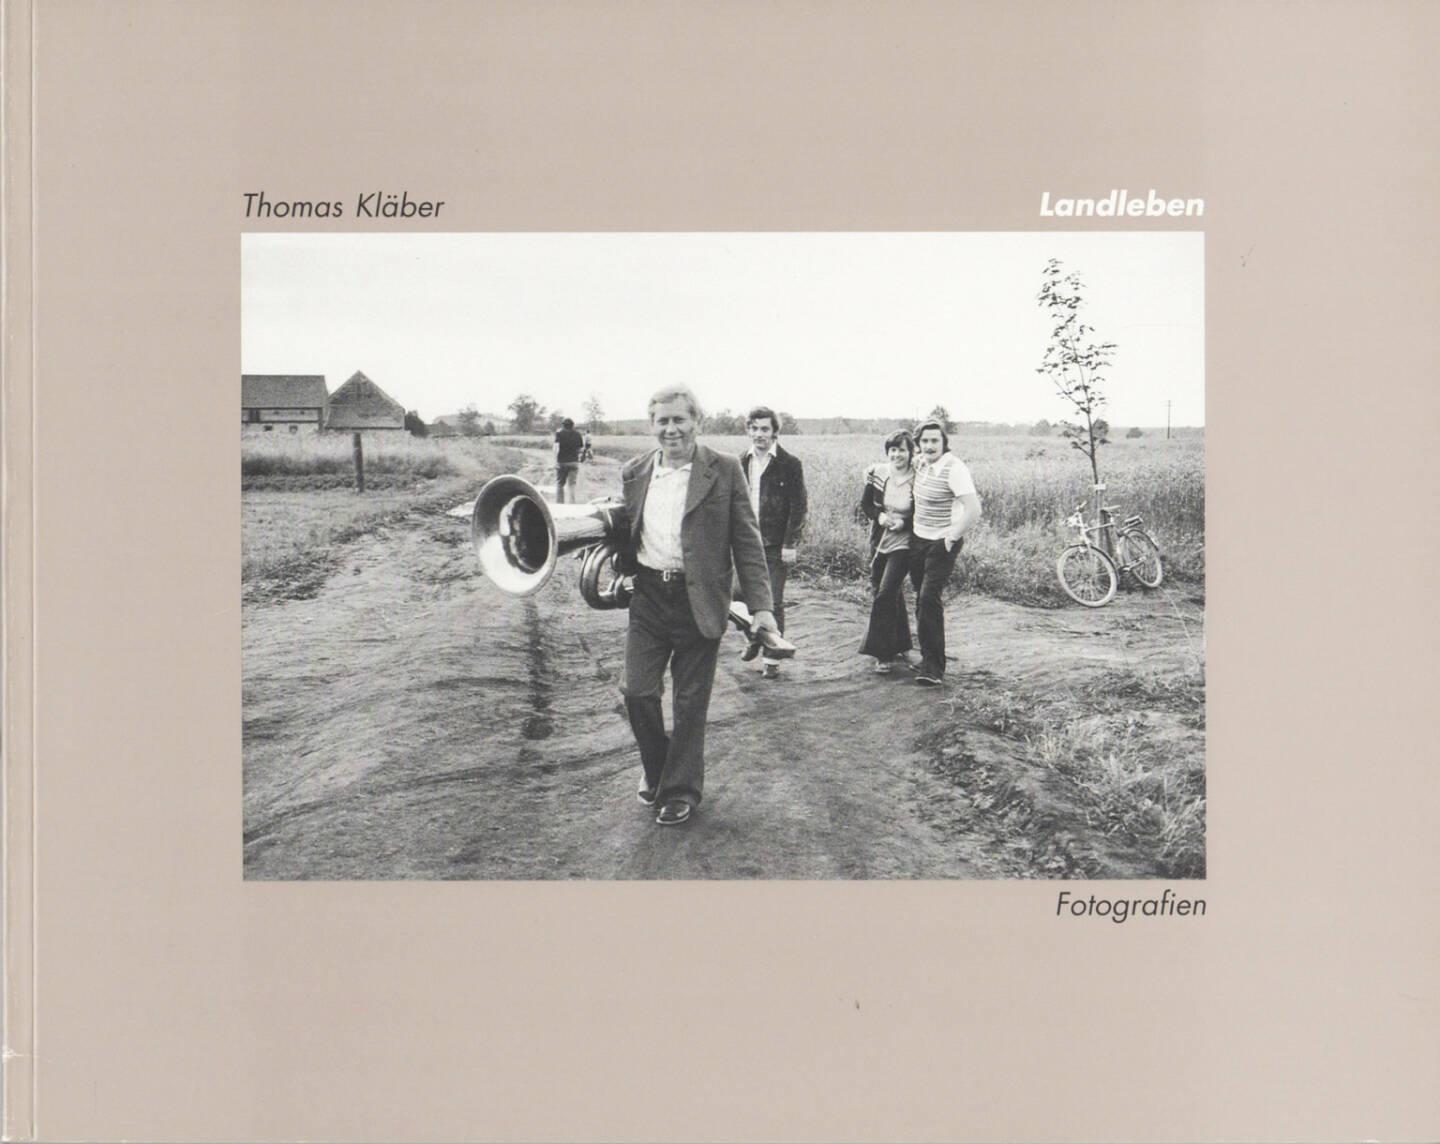 Thomas Kläber - Landleben. Fotografien, Druck, Repro und Verlag Gmbh 1993, Cover - http://josefchladek.com/book/thomas_klaber_-_landleben_fotografien